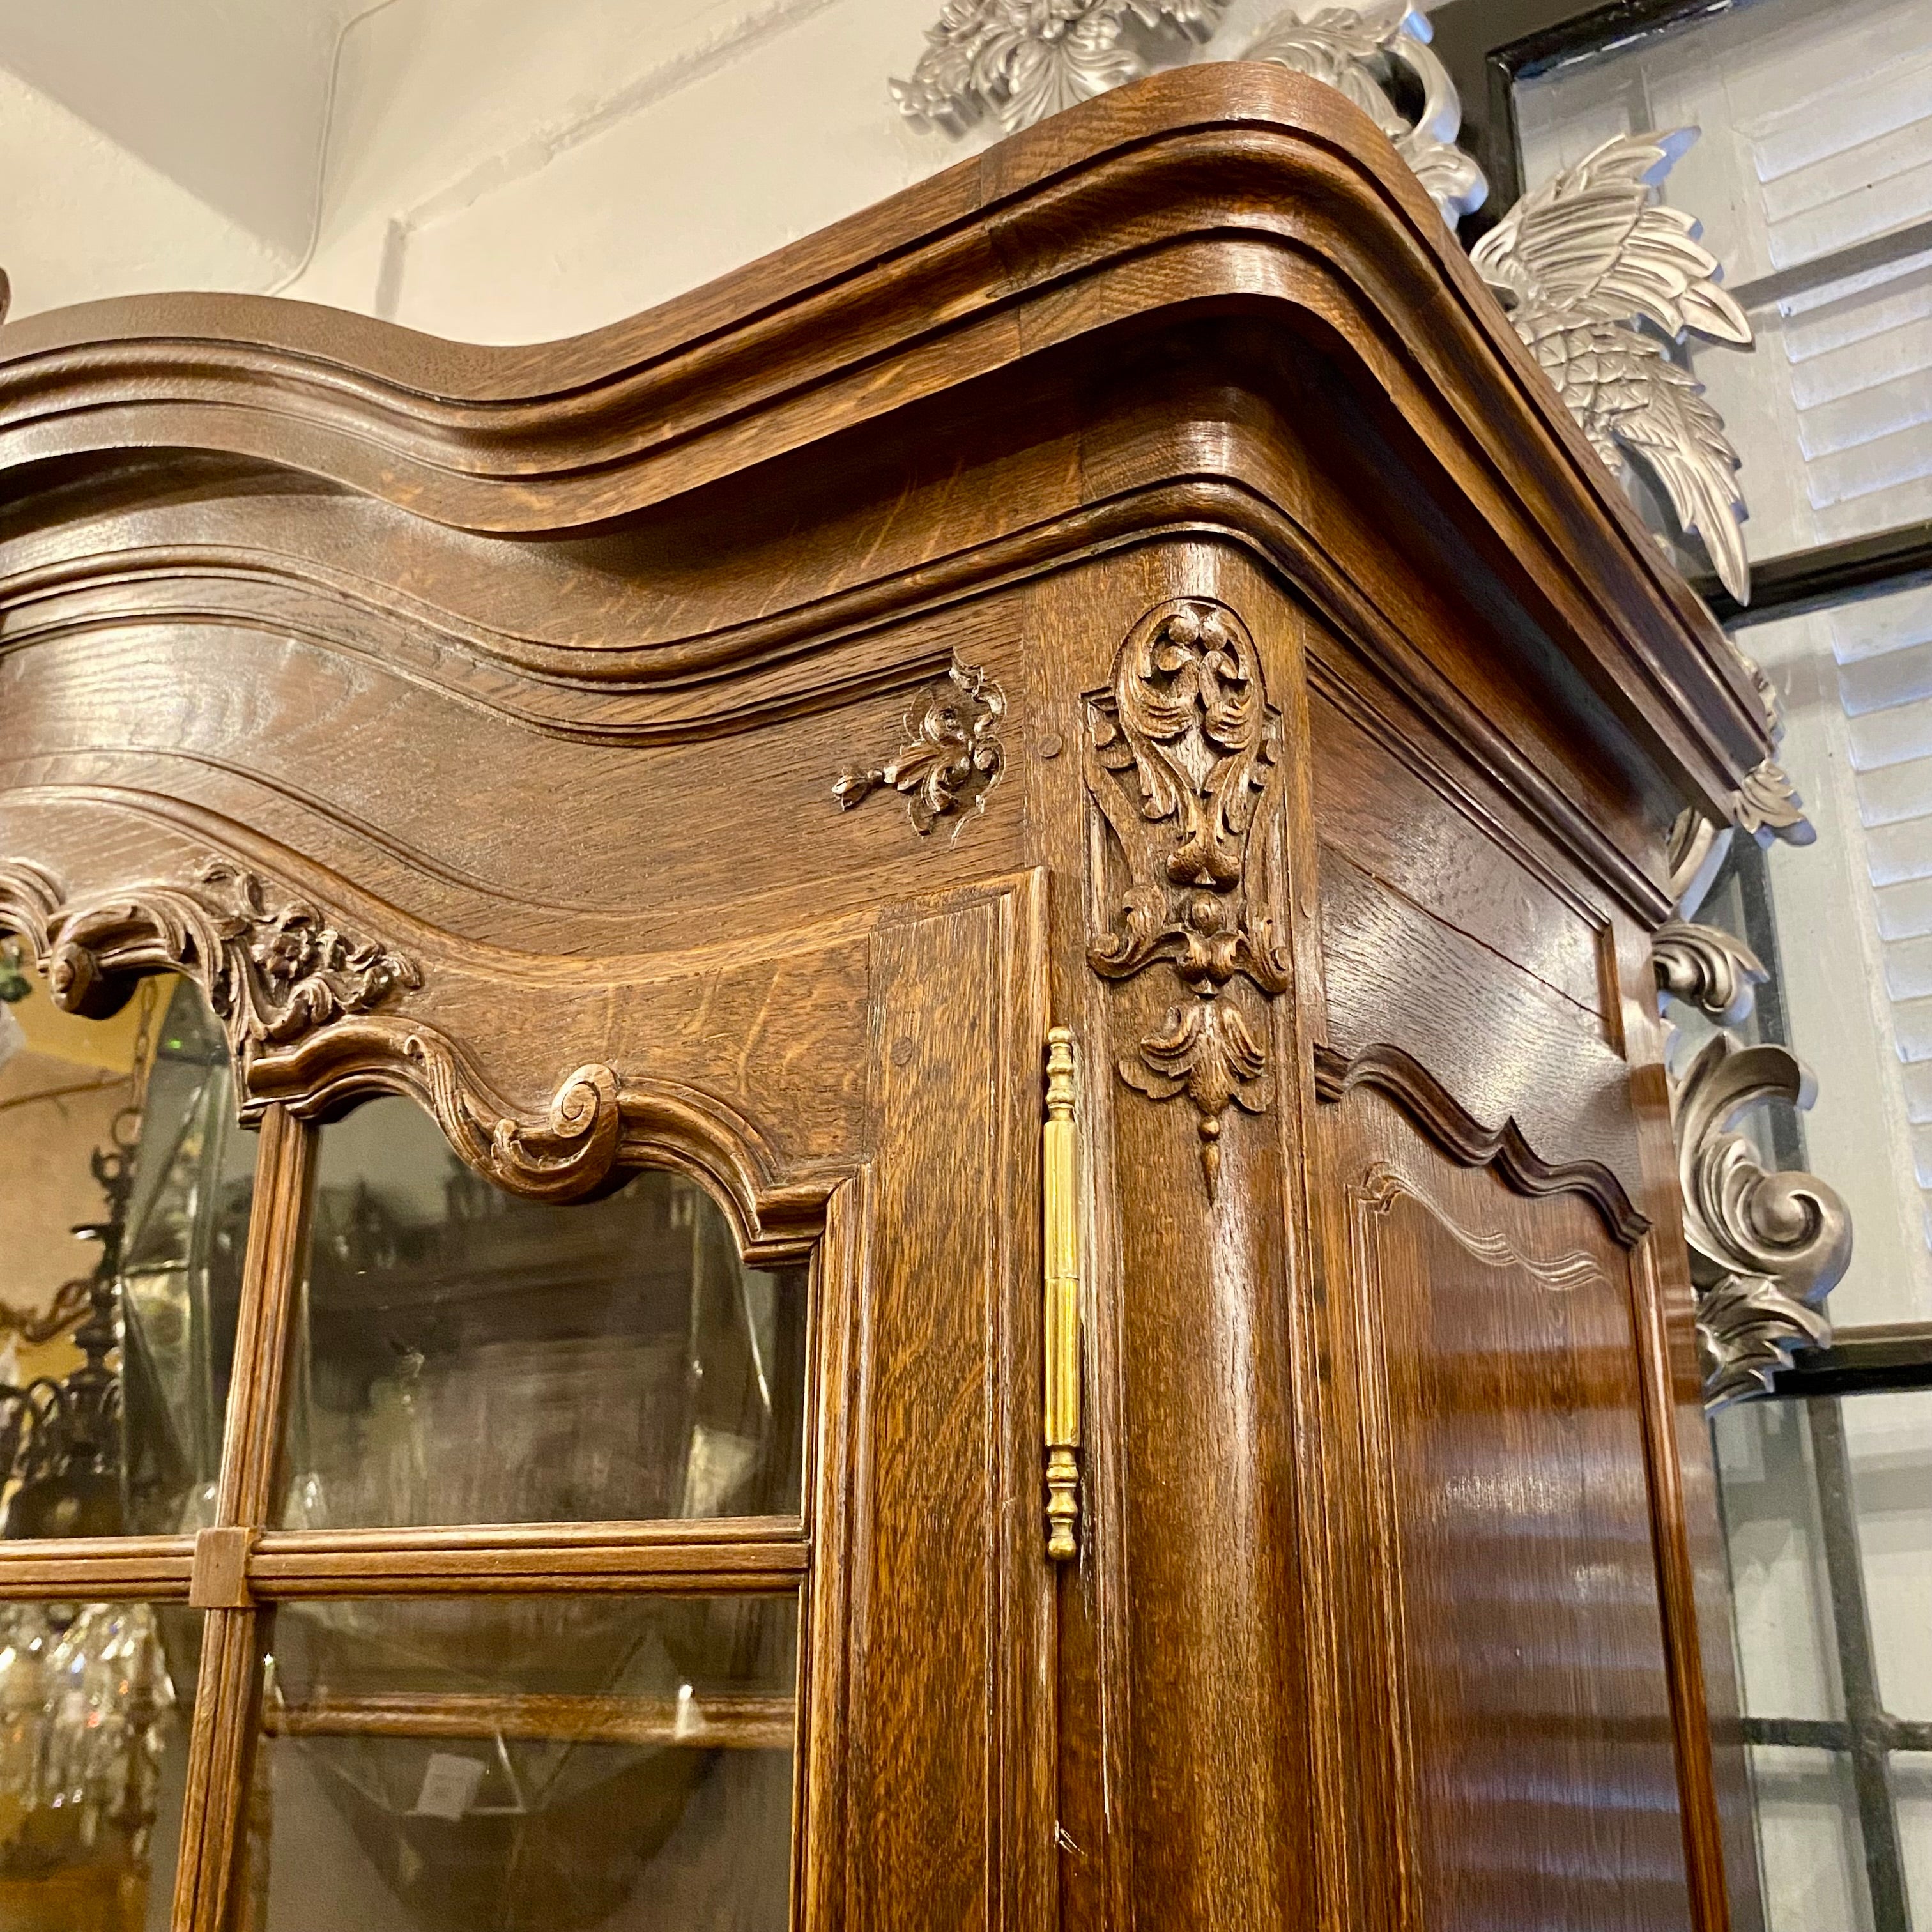 Large Oak Art Nouveau Display Cabinet  with Brass Detailing